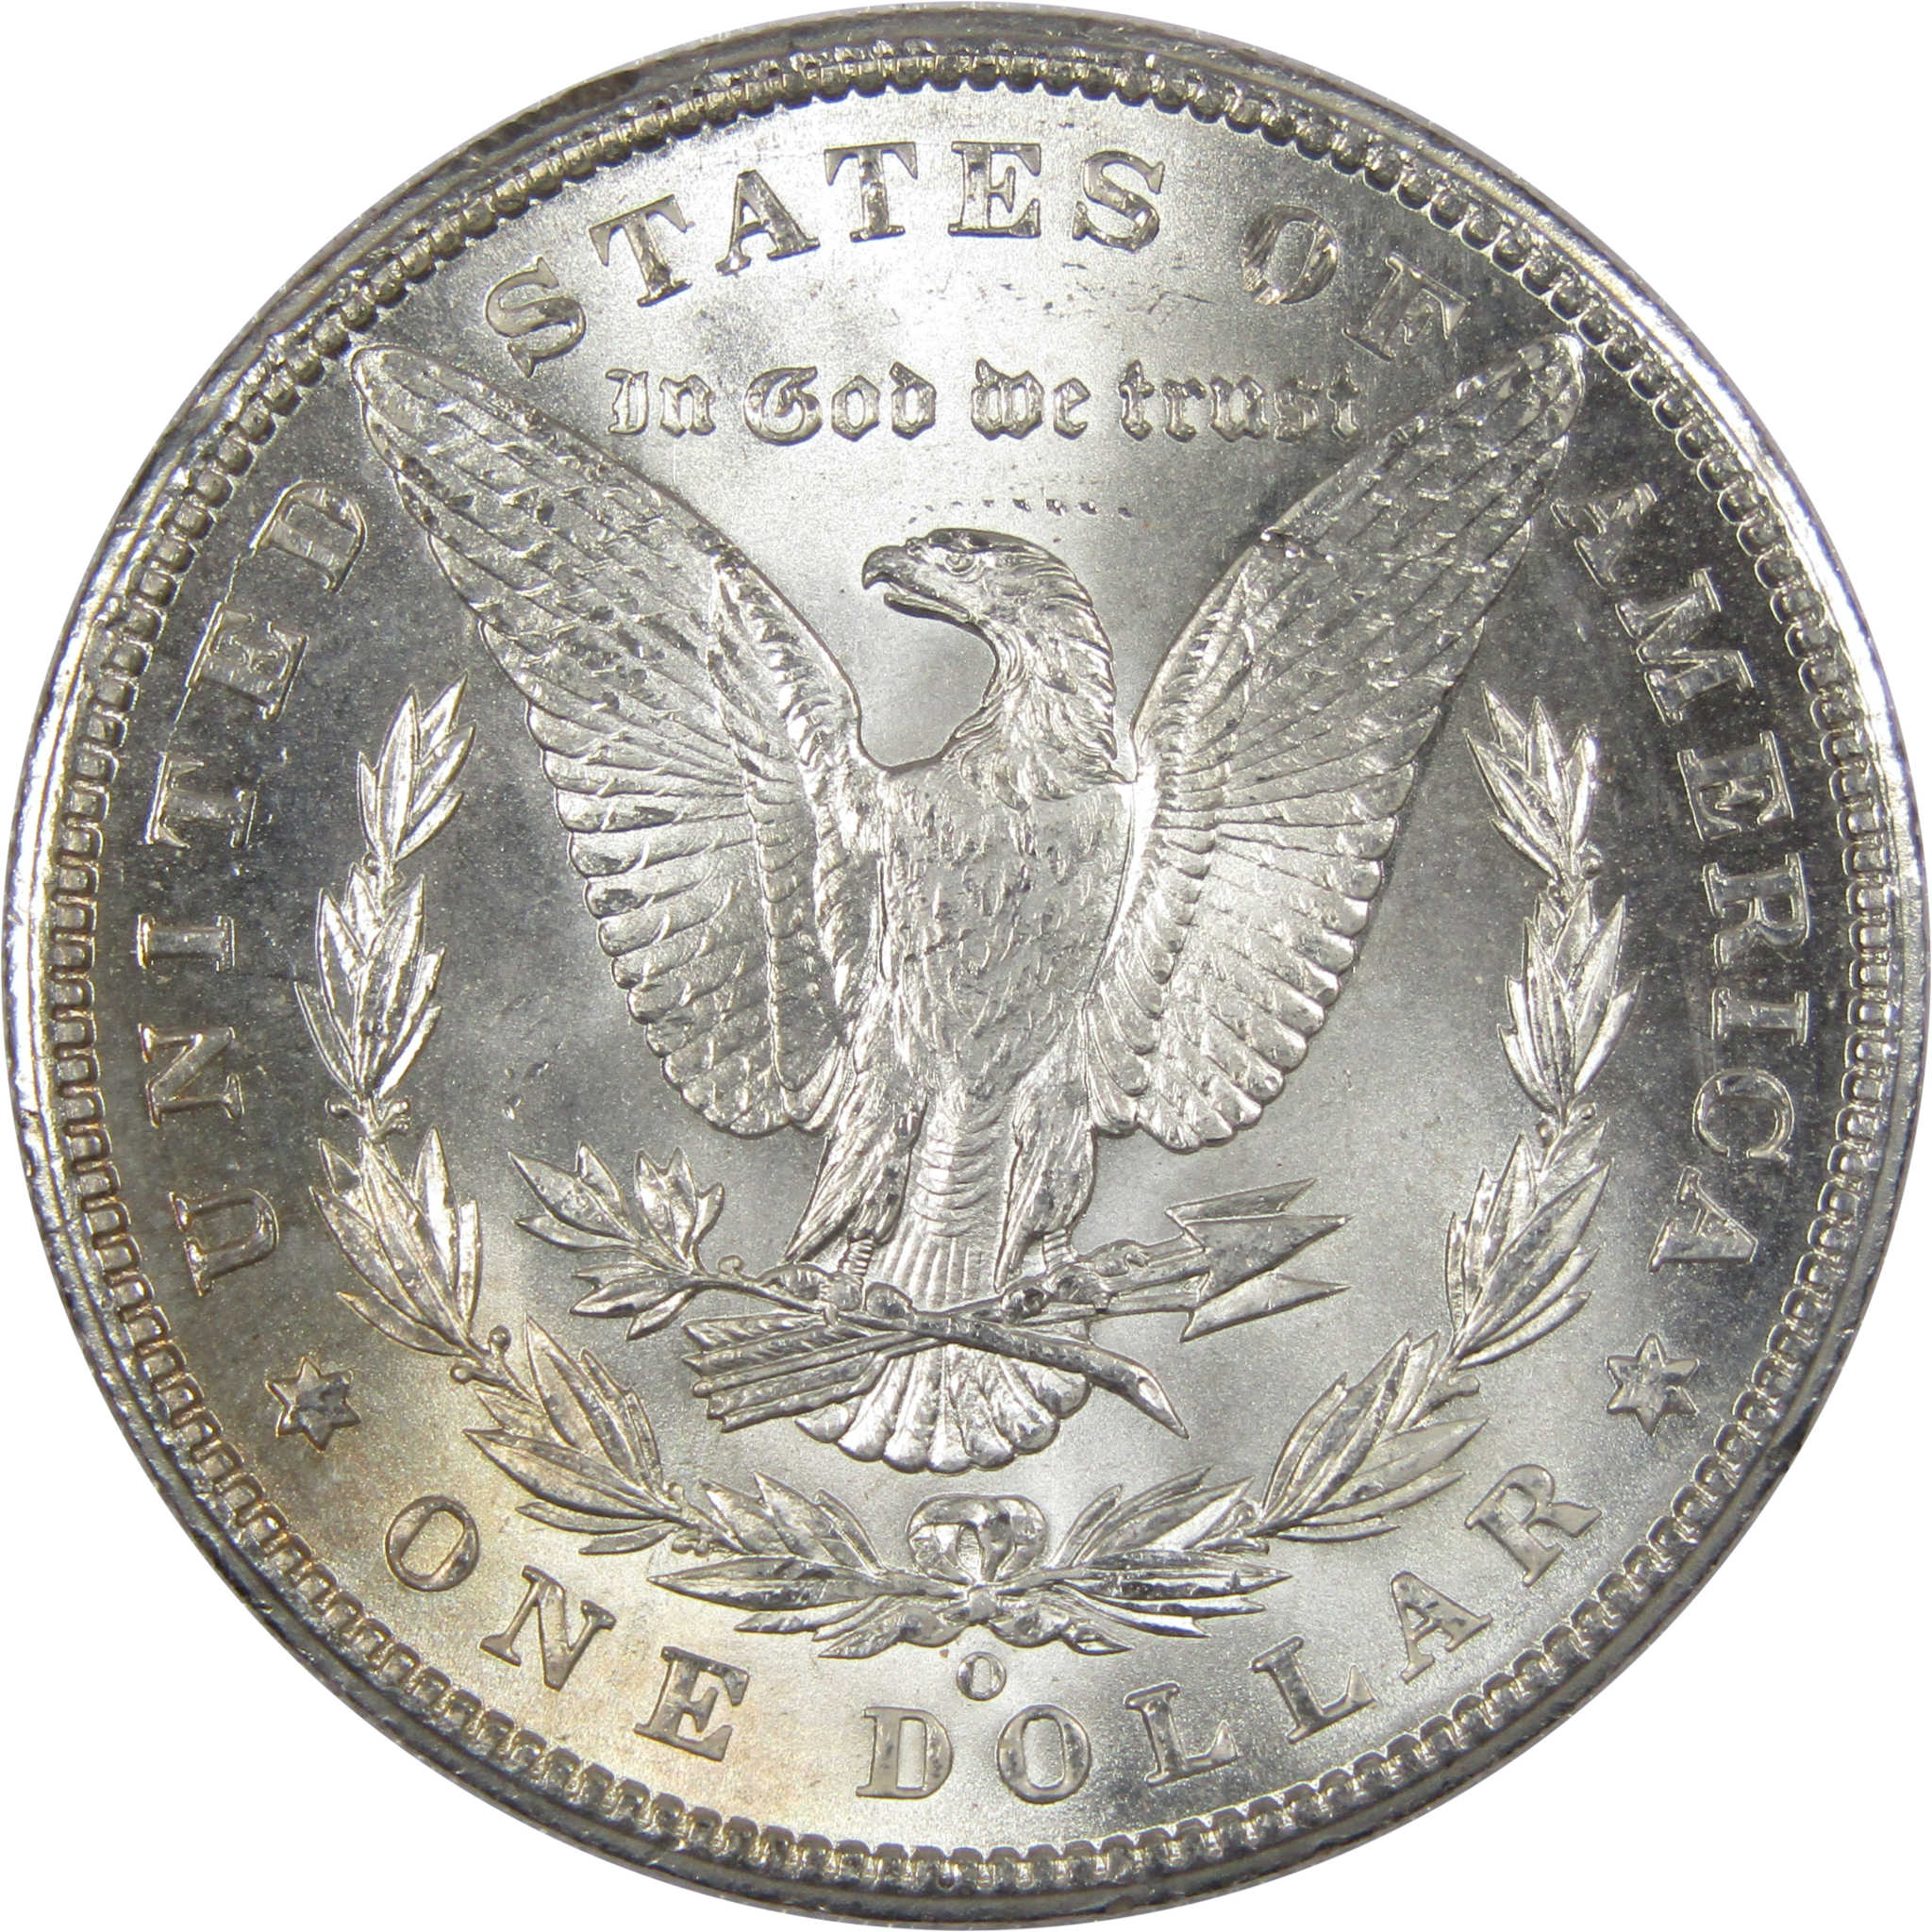 1900 O Morgan Dollar BU Uncirculated Mint State 90% Silver SKU:IPC9765 - Morgan coin - Morgan silver dollar - Morgan silver dollar for sale - Profile Coins &amp; Collectibles